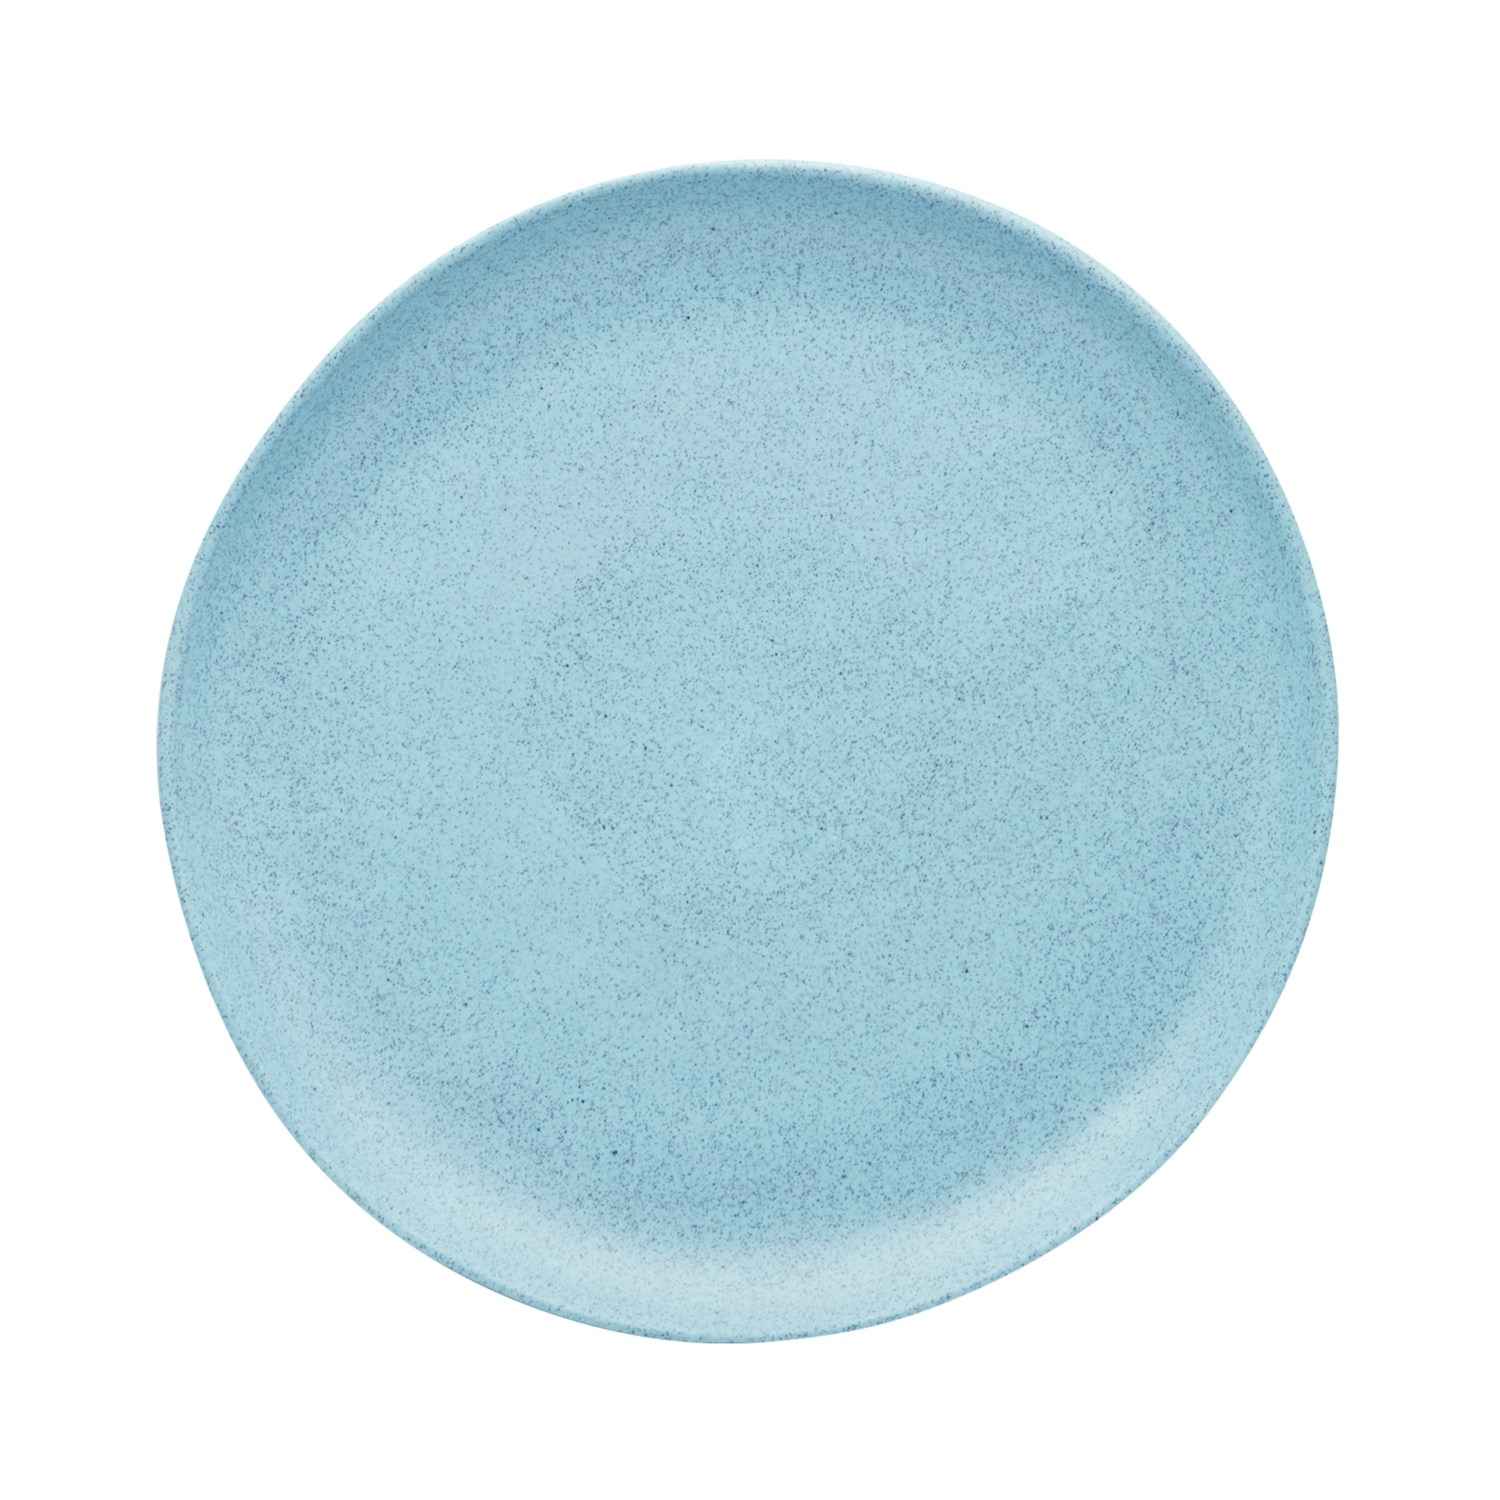 Dinewell Melamine Dinner Plate Blue Speckle